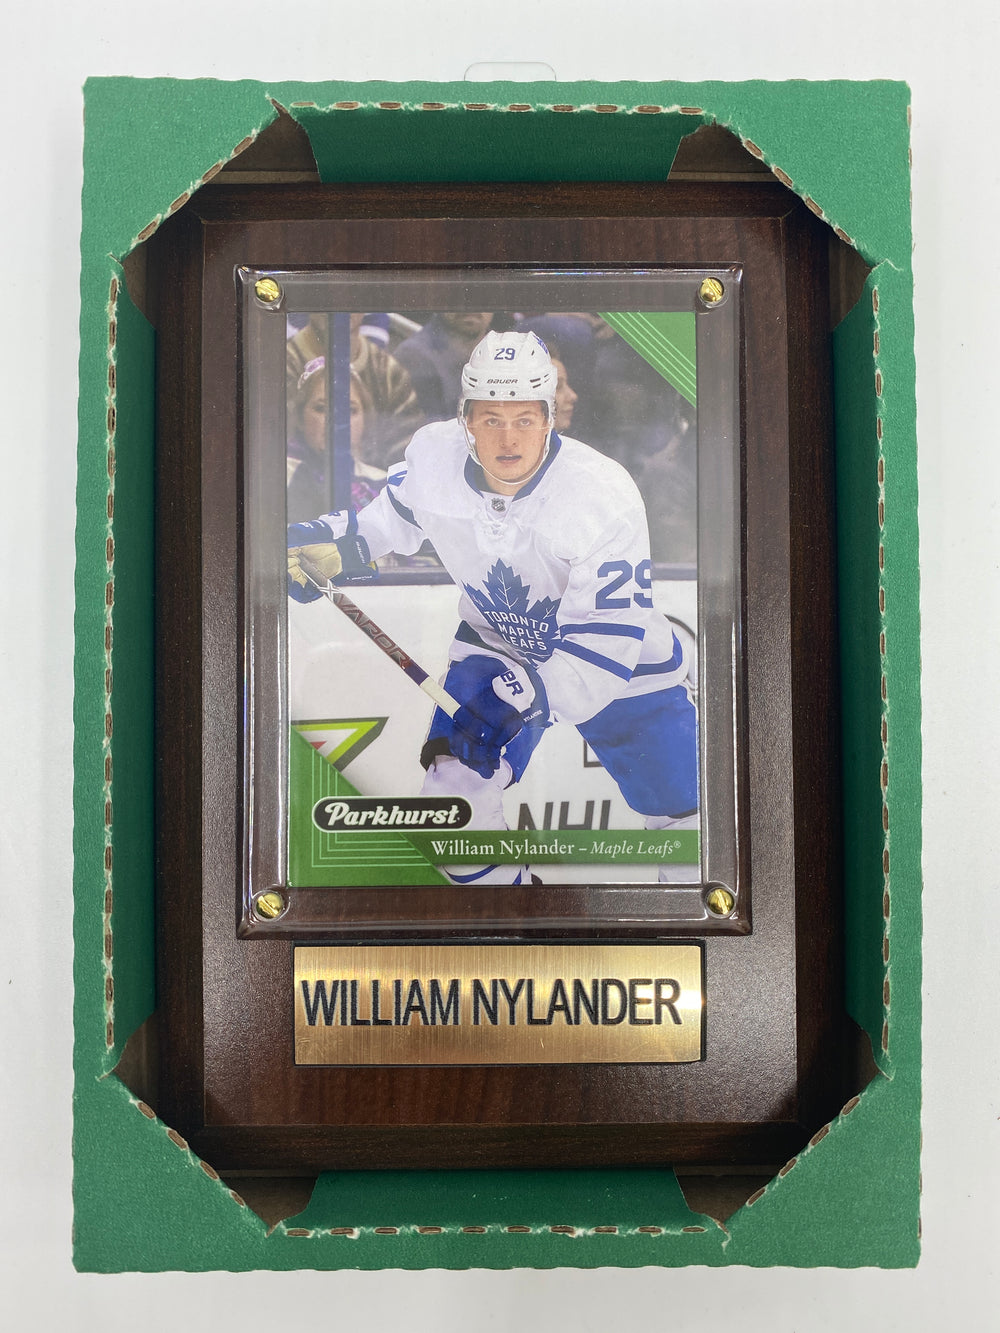 NHL Plaque with card 4x6 Leafs William Nylander